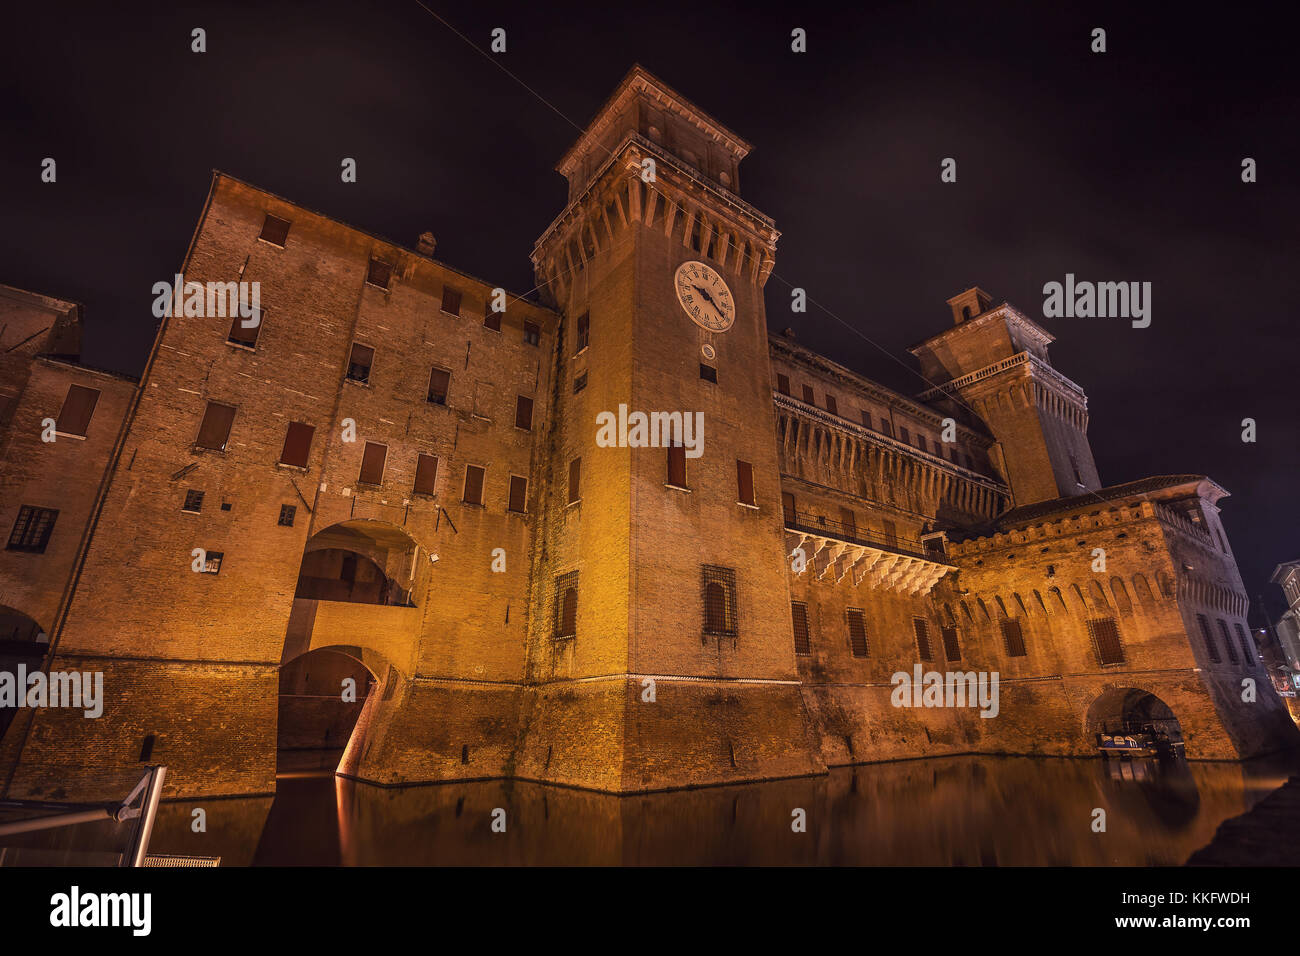 Estense Castle of Renaissance town of Ferrara, Italy, by night Stock Photo